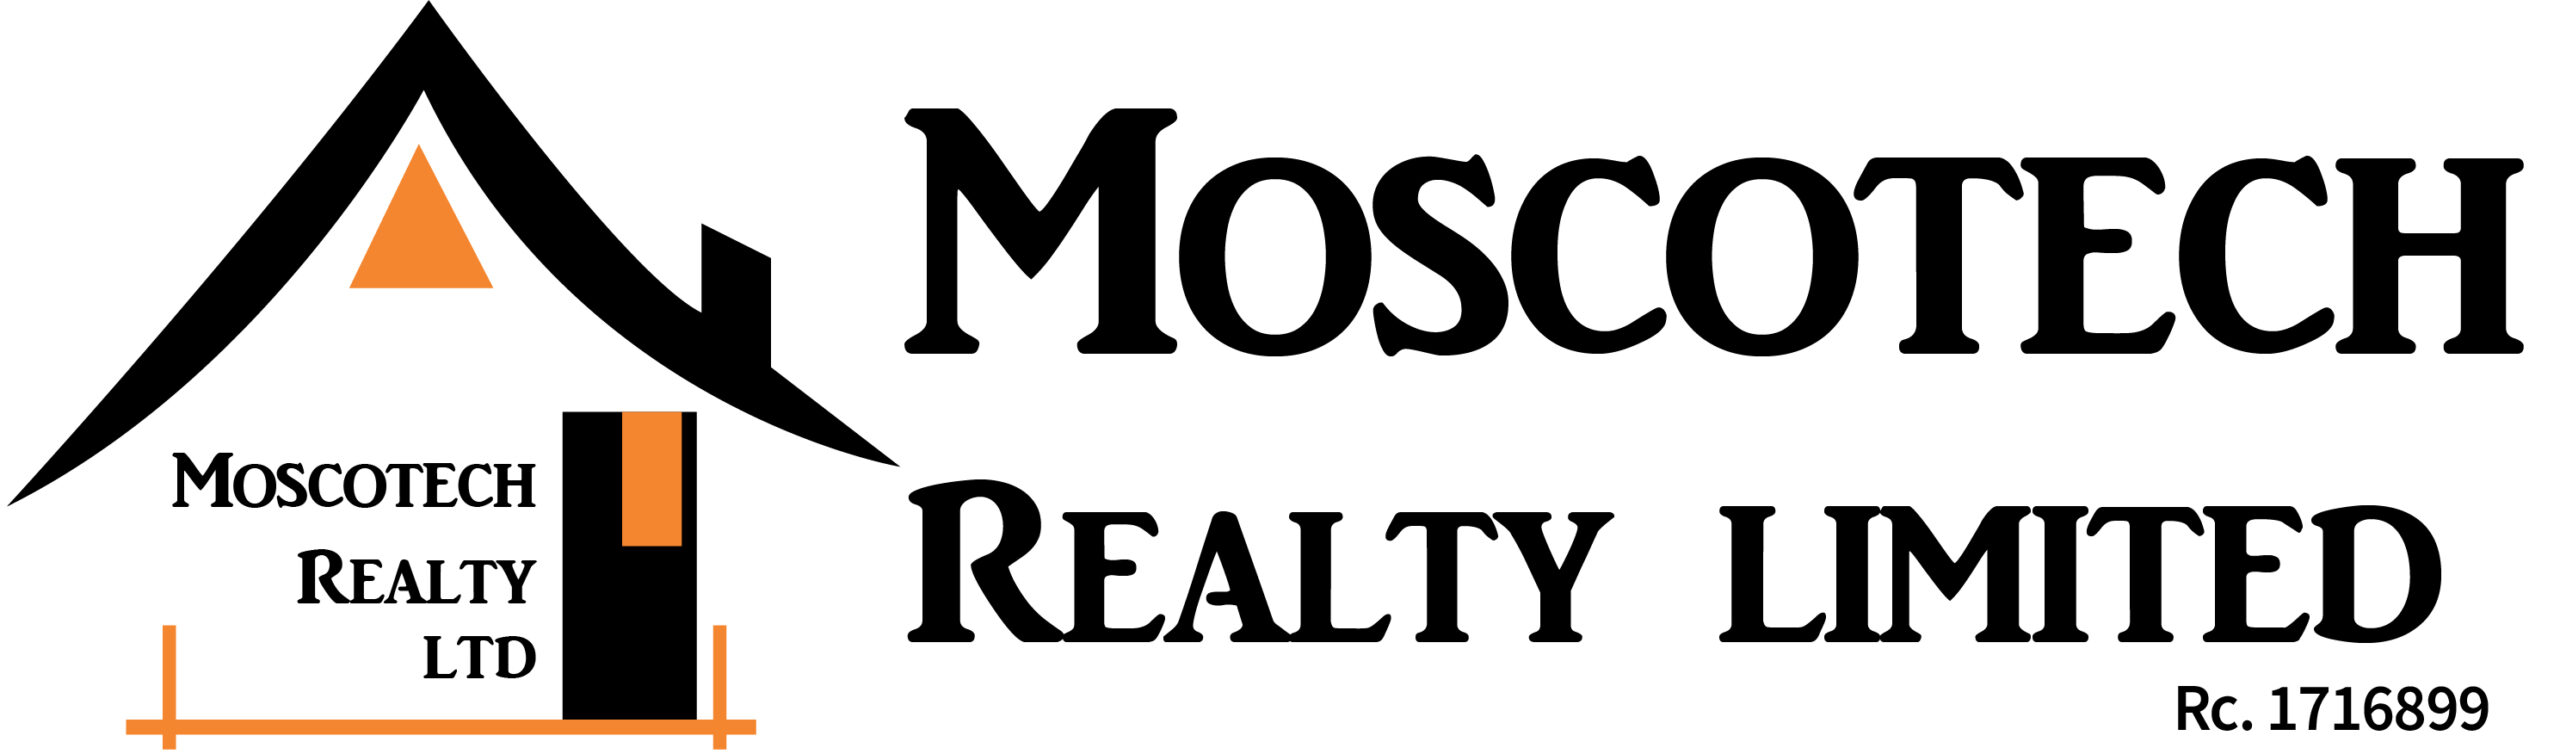 Moscotech Realty Ltd